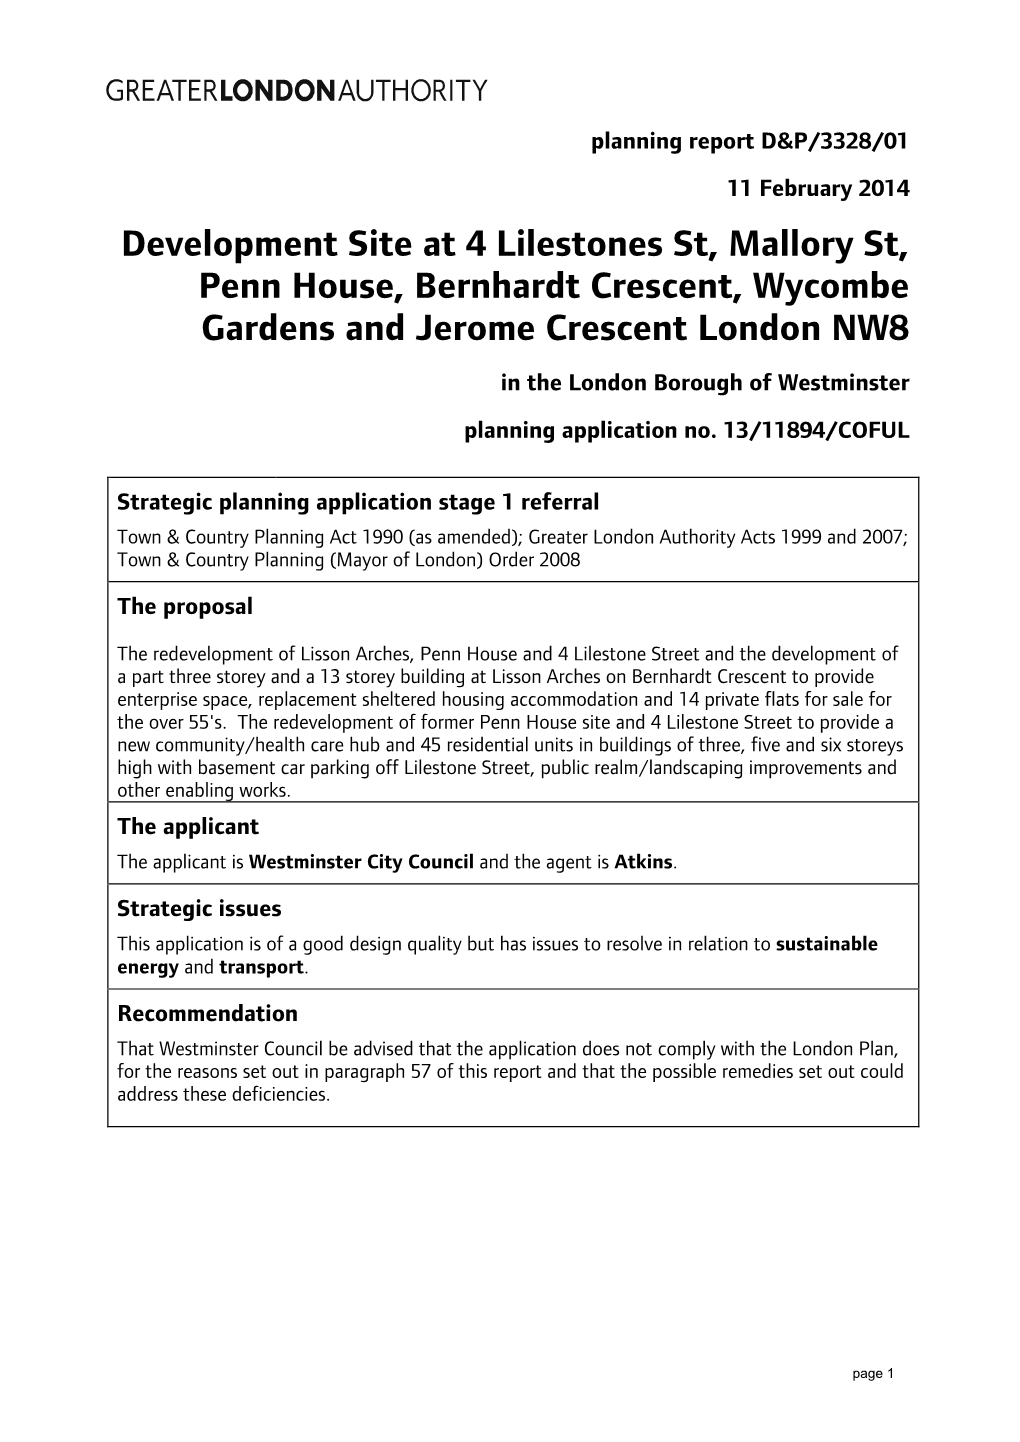 Development Site at 4 Lilestones St, Mallory St, Penn House